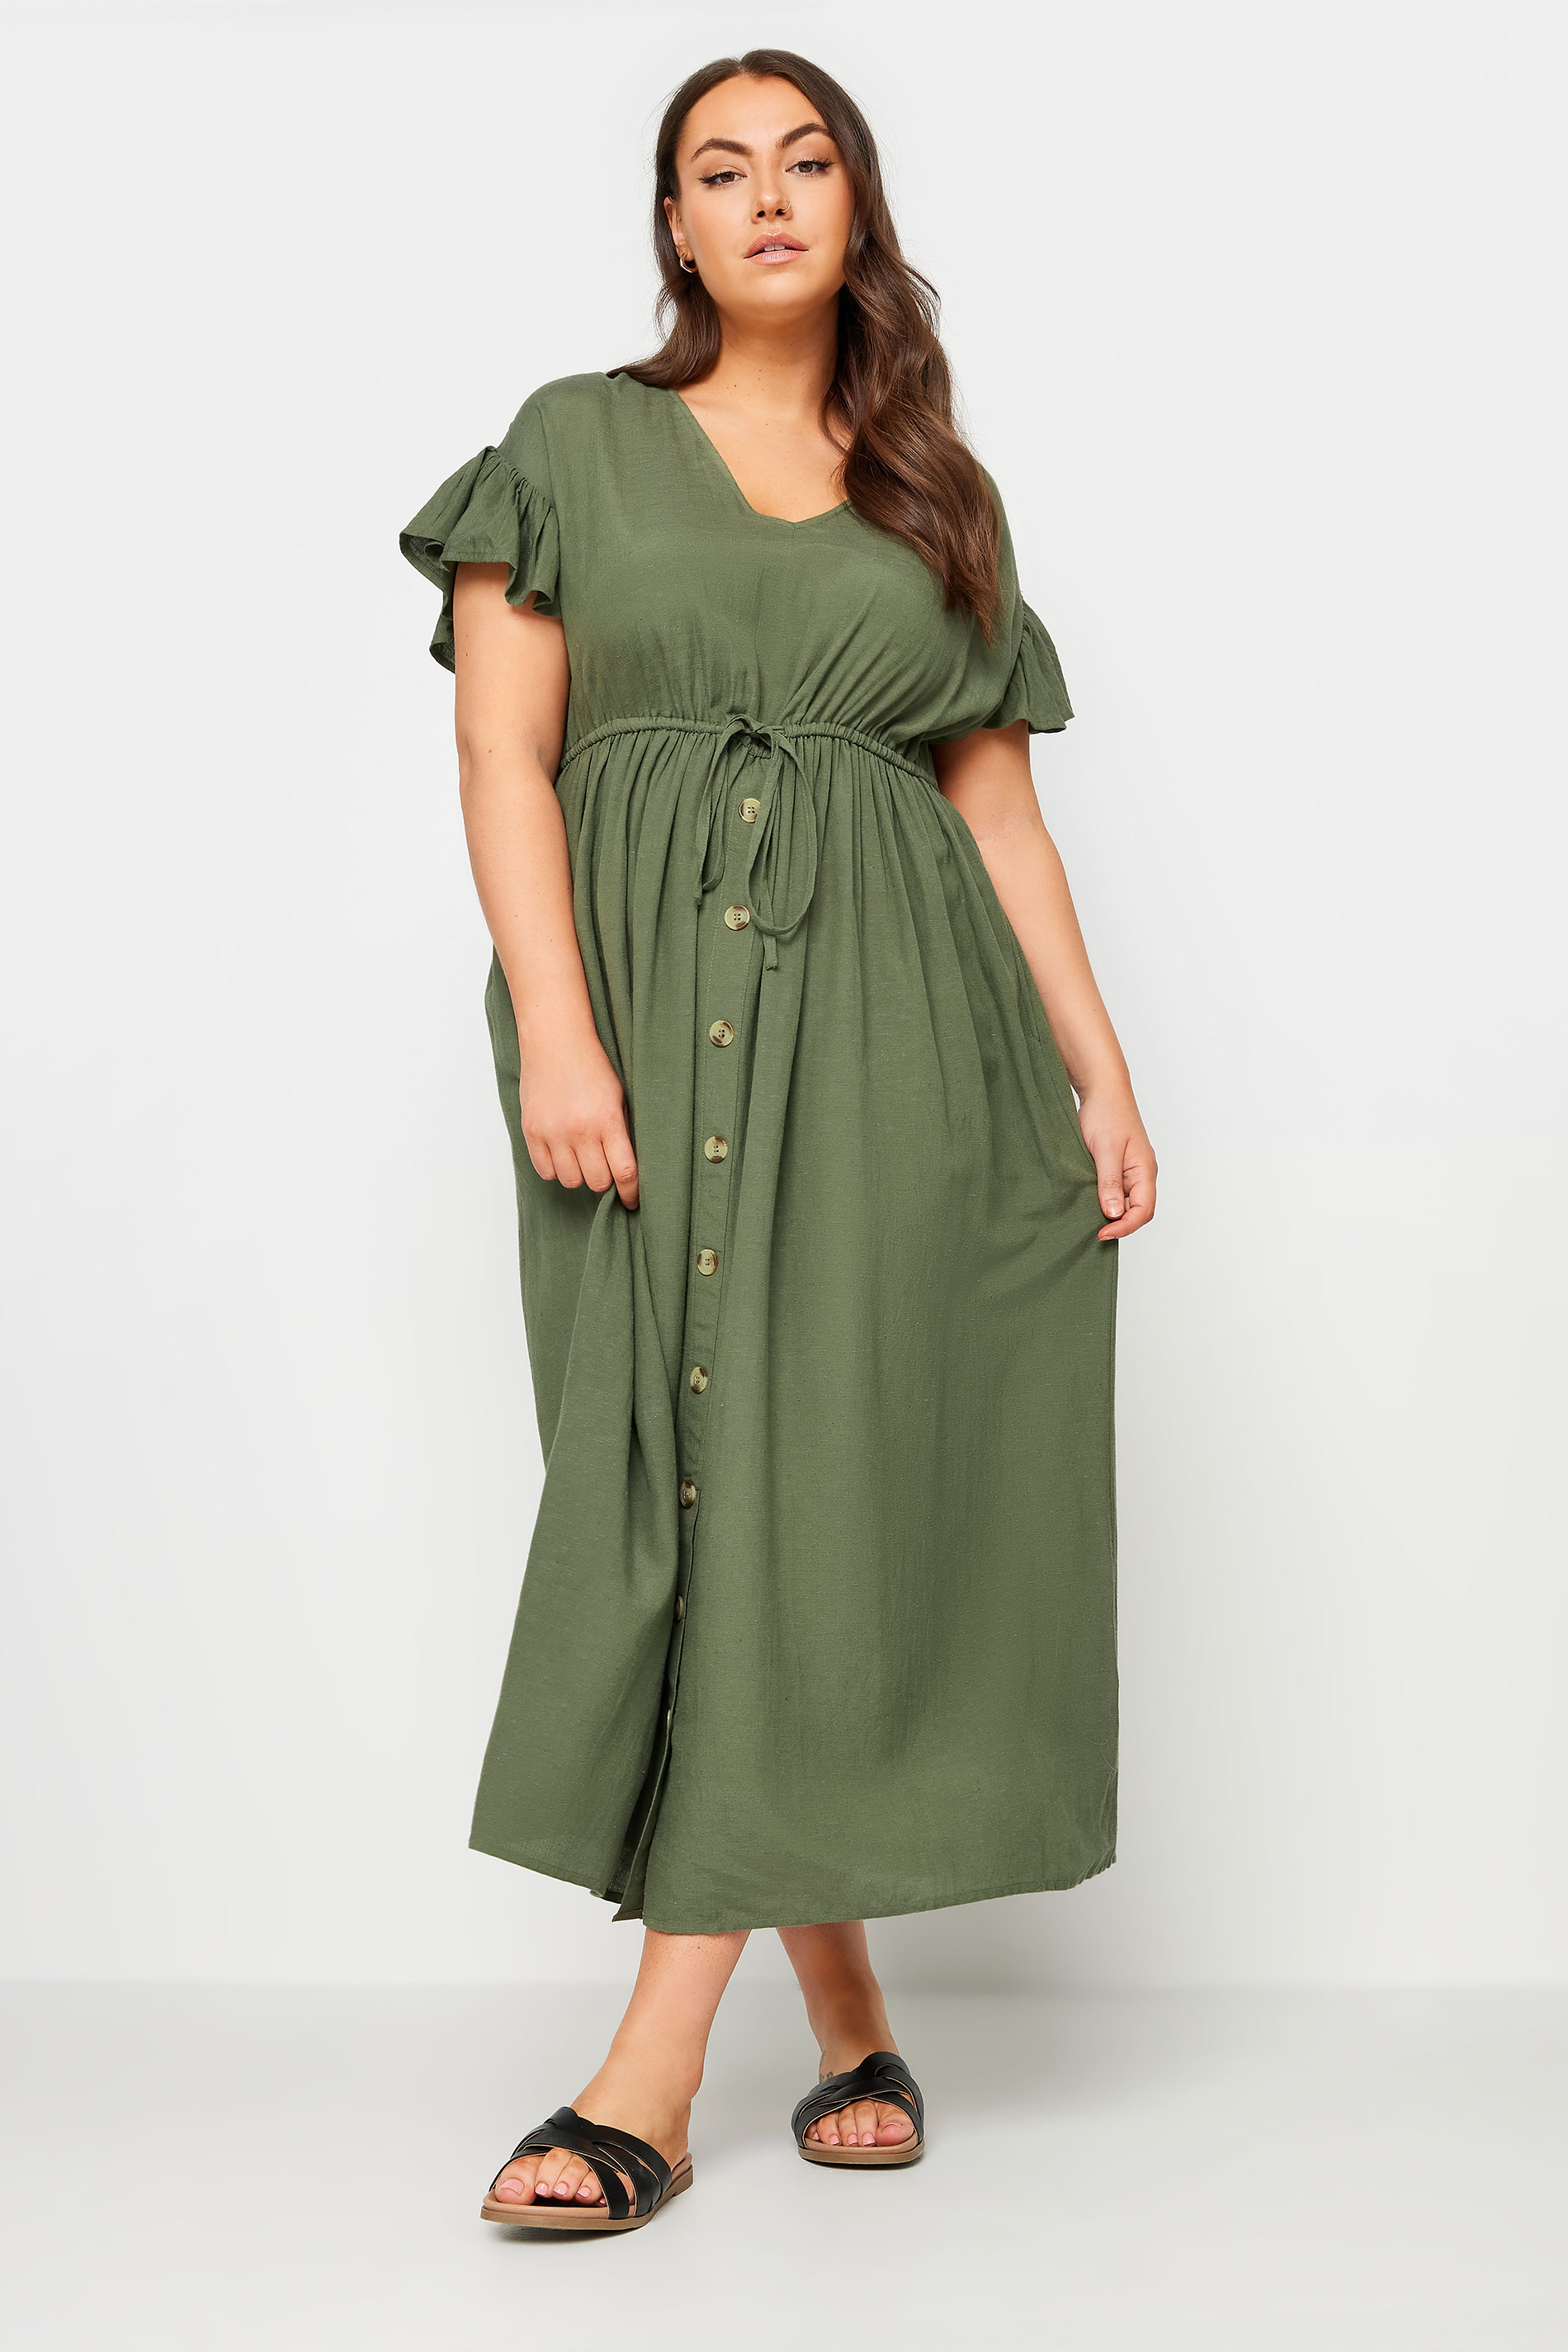 YOURS Plus Size Khaki Green Linen Maxi Dress | Yours Clothing 2